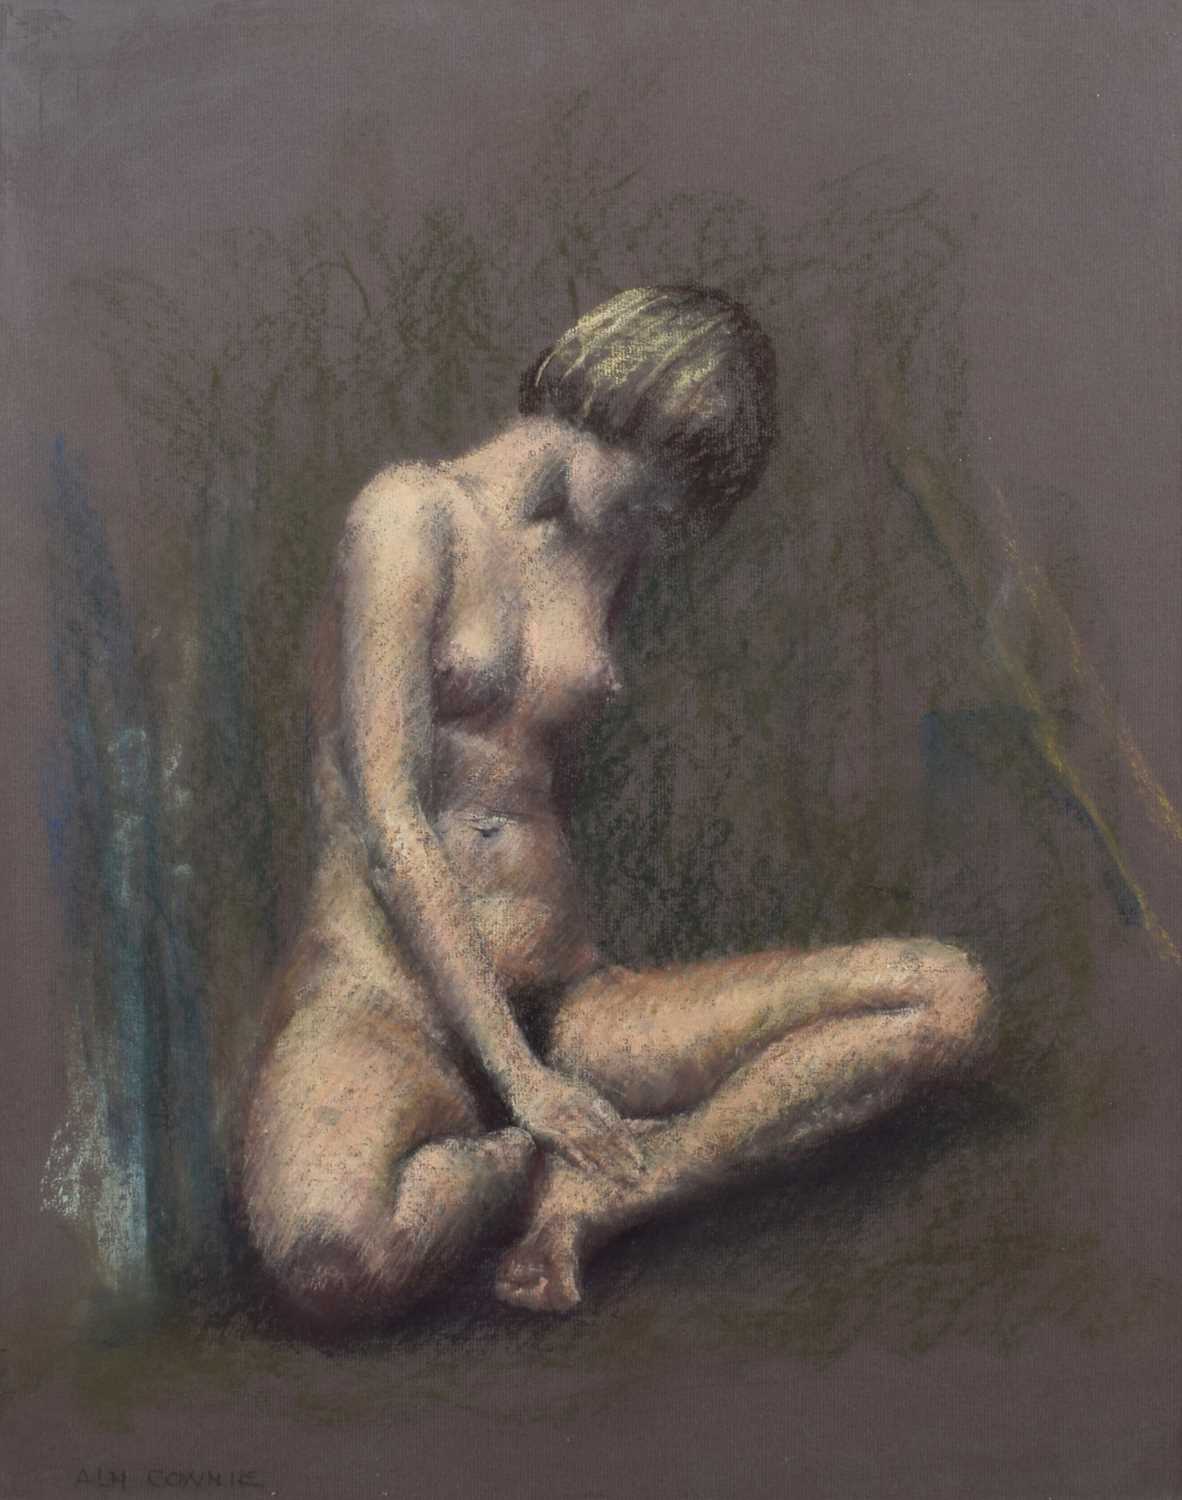 Allan Cownie (Welsh 1927-2015) Seated female nude, pastel.